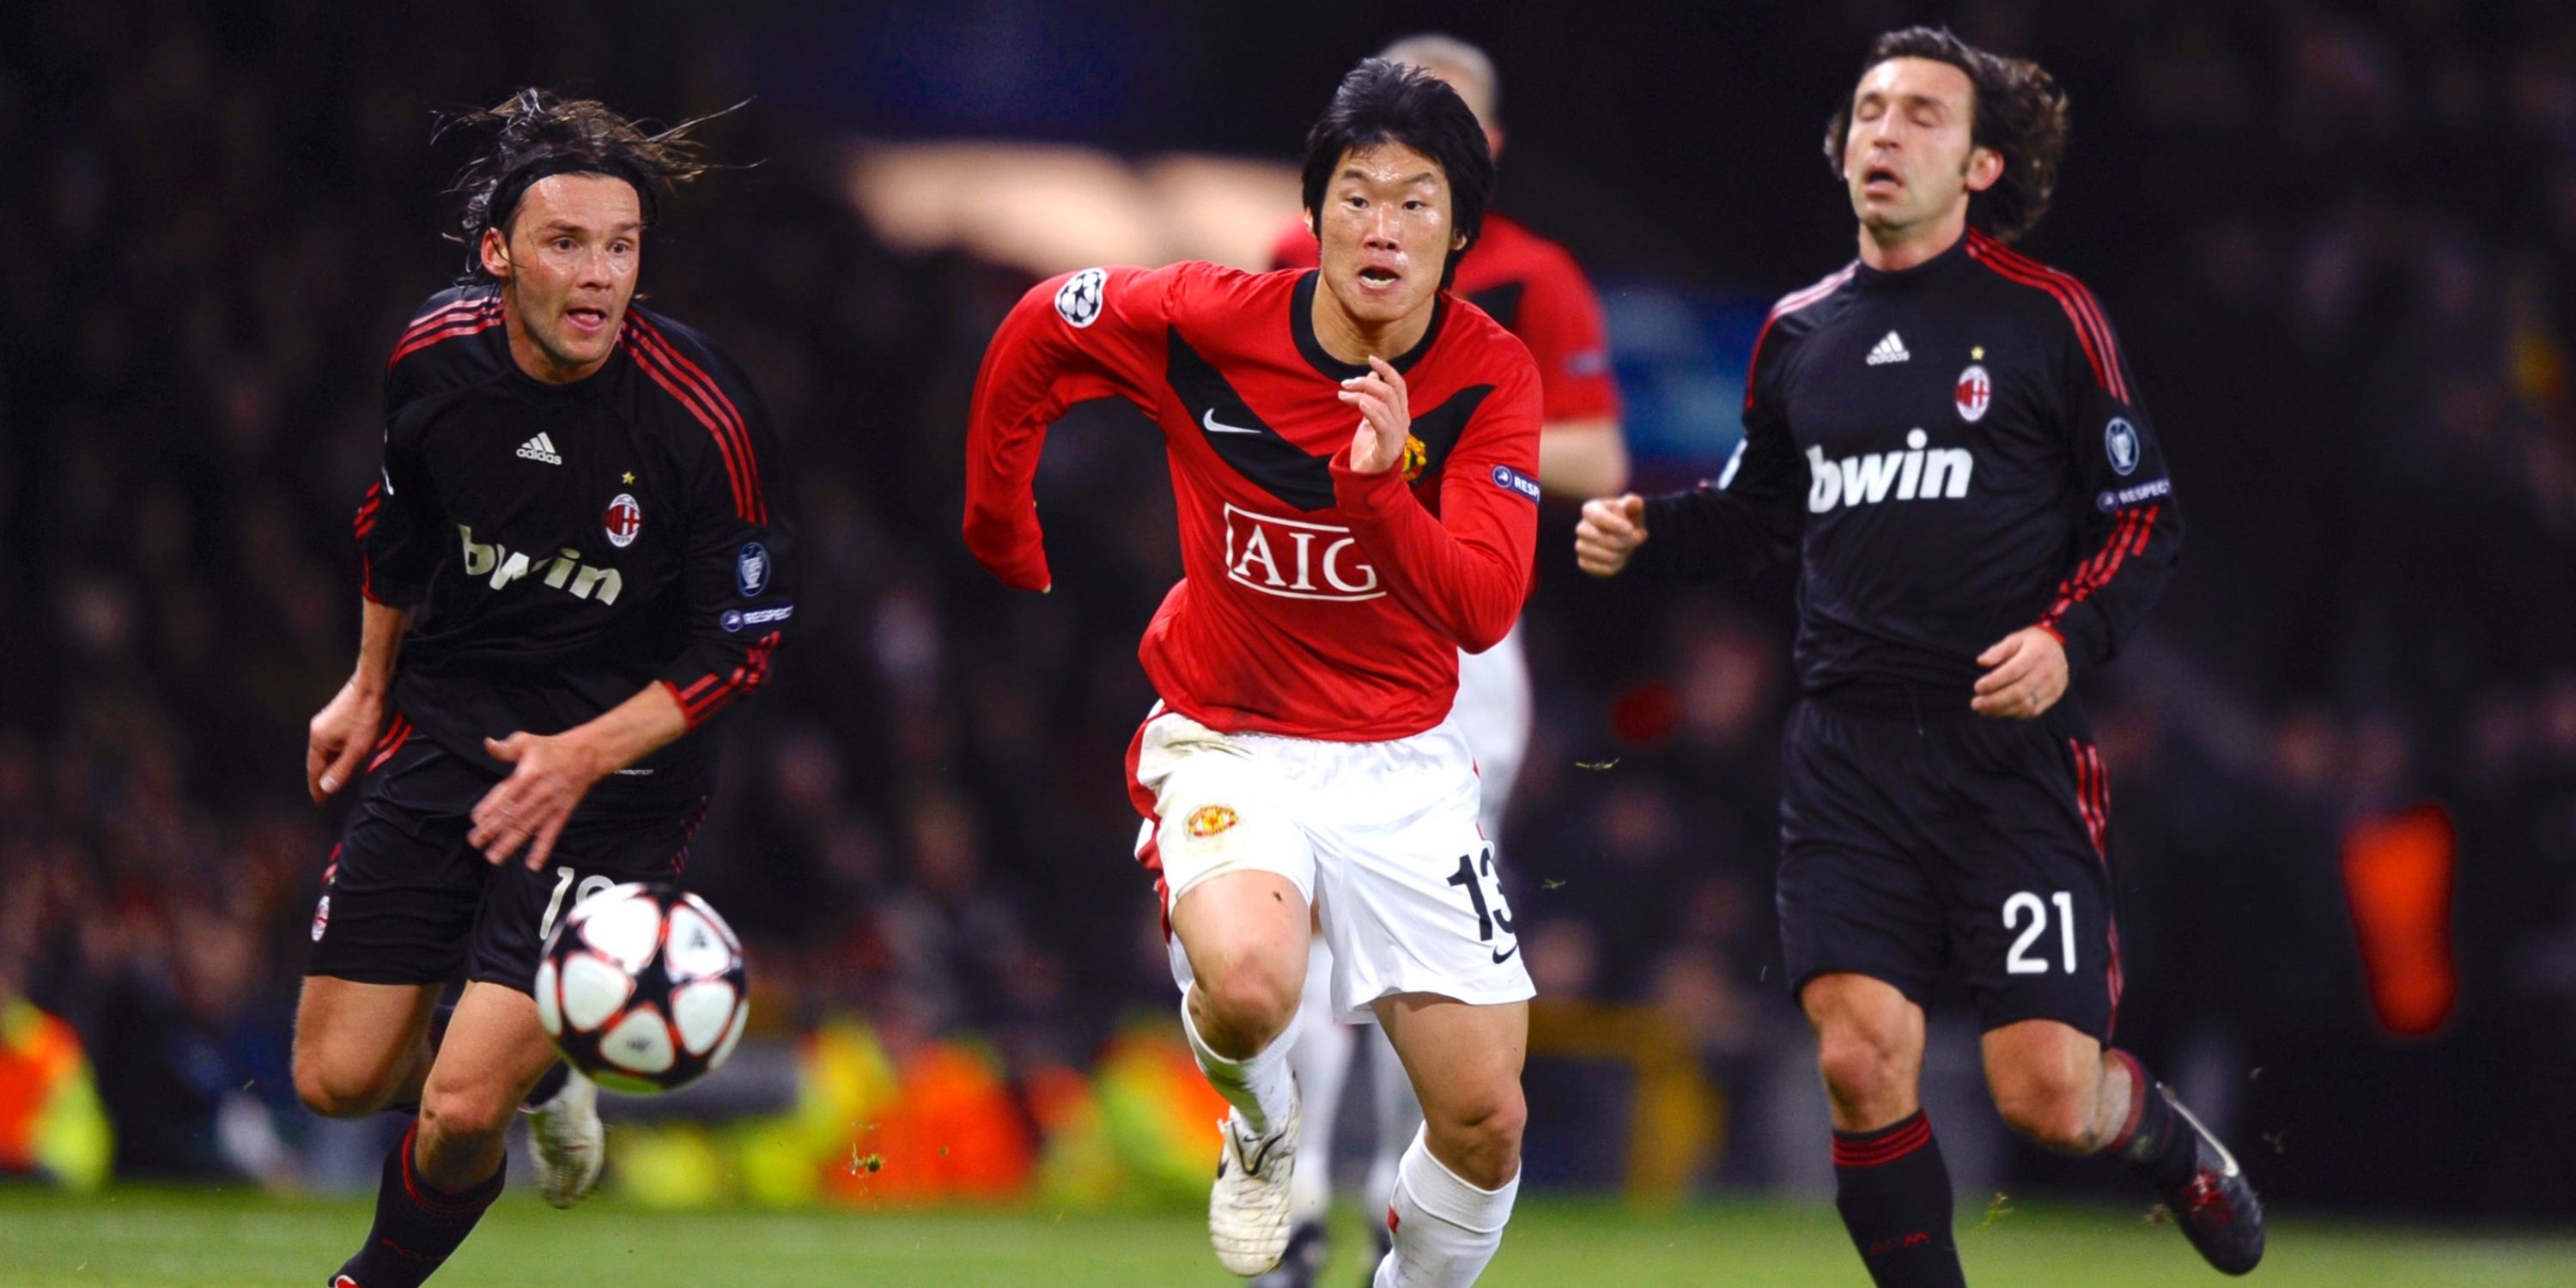 Park Ji-sung against AC Milan in the Champions League